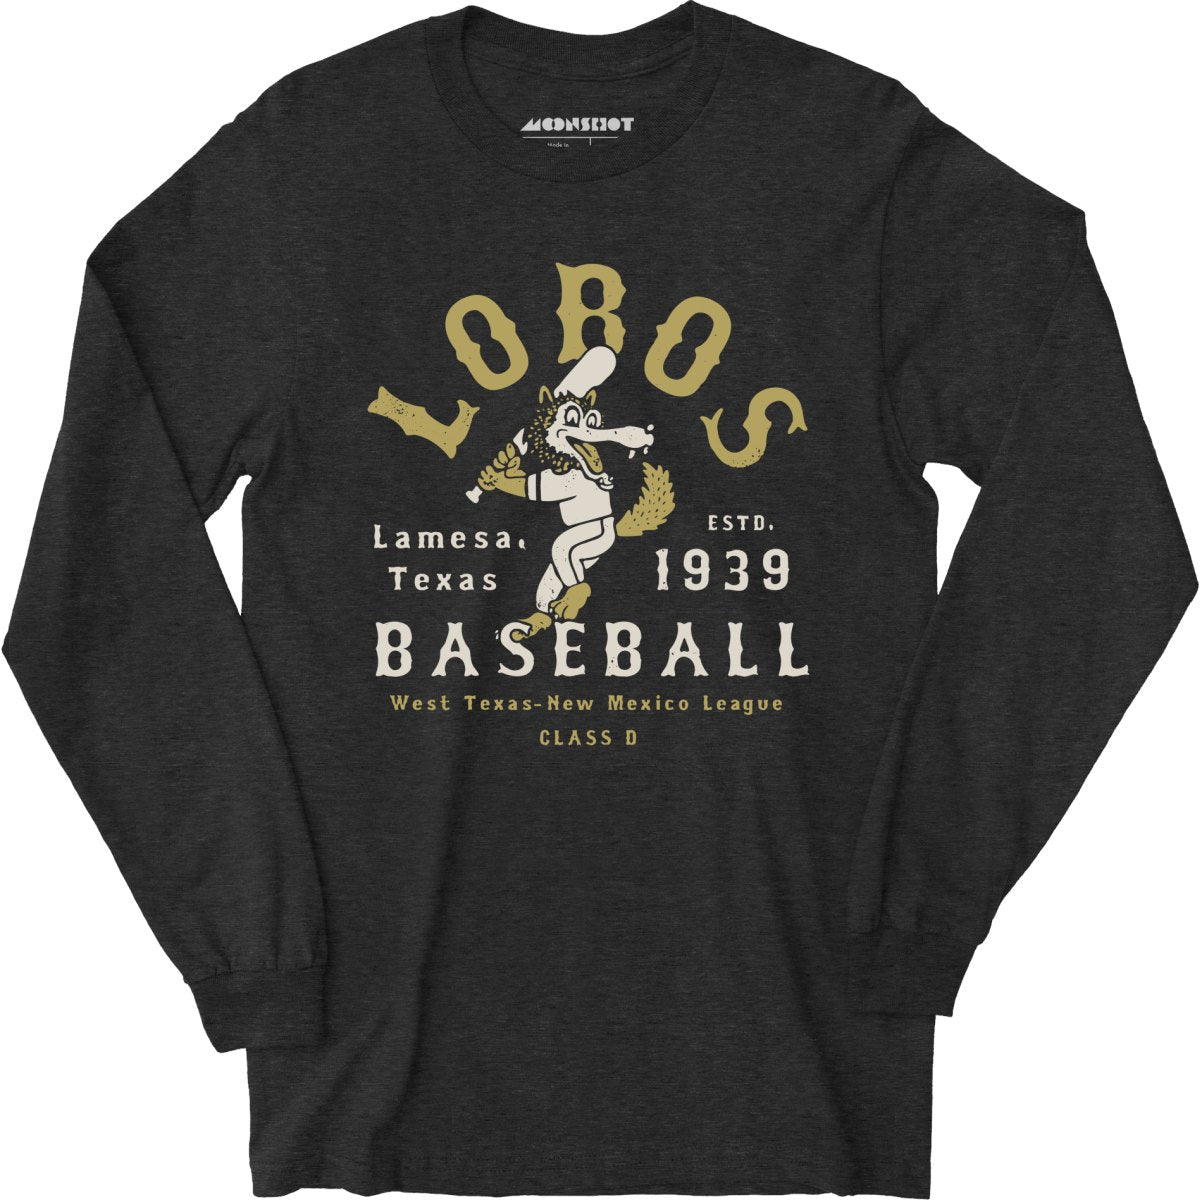 Lamesa Lobos - Texas - Vintage Defunct Baseball Teams - Long Sleeve T-Shirt